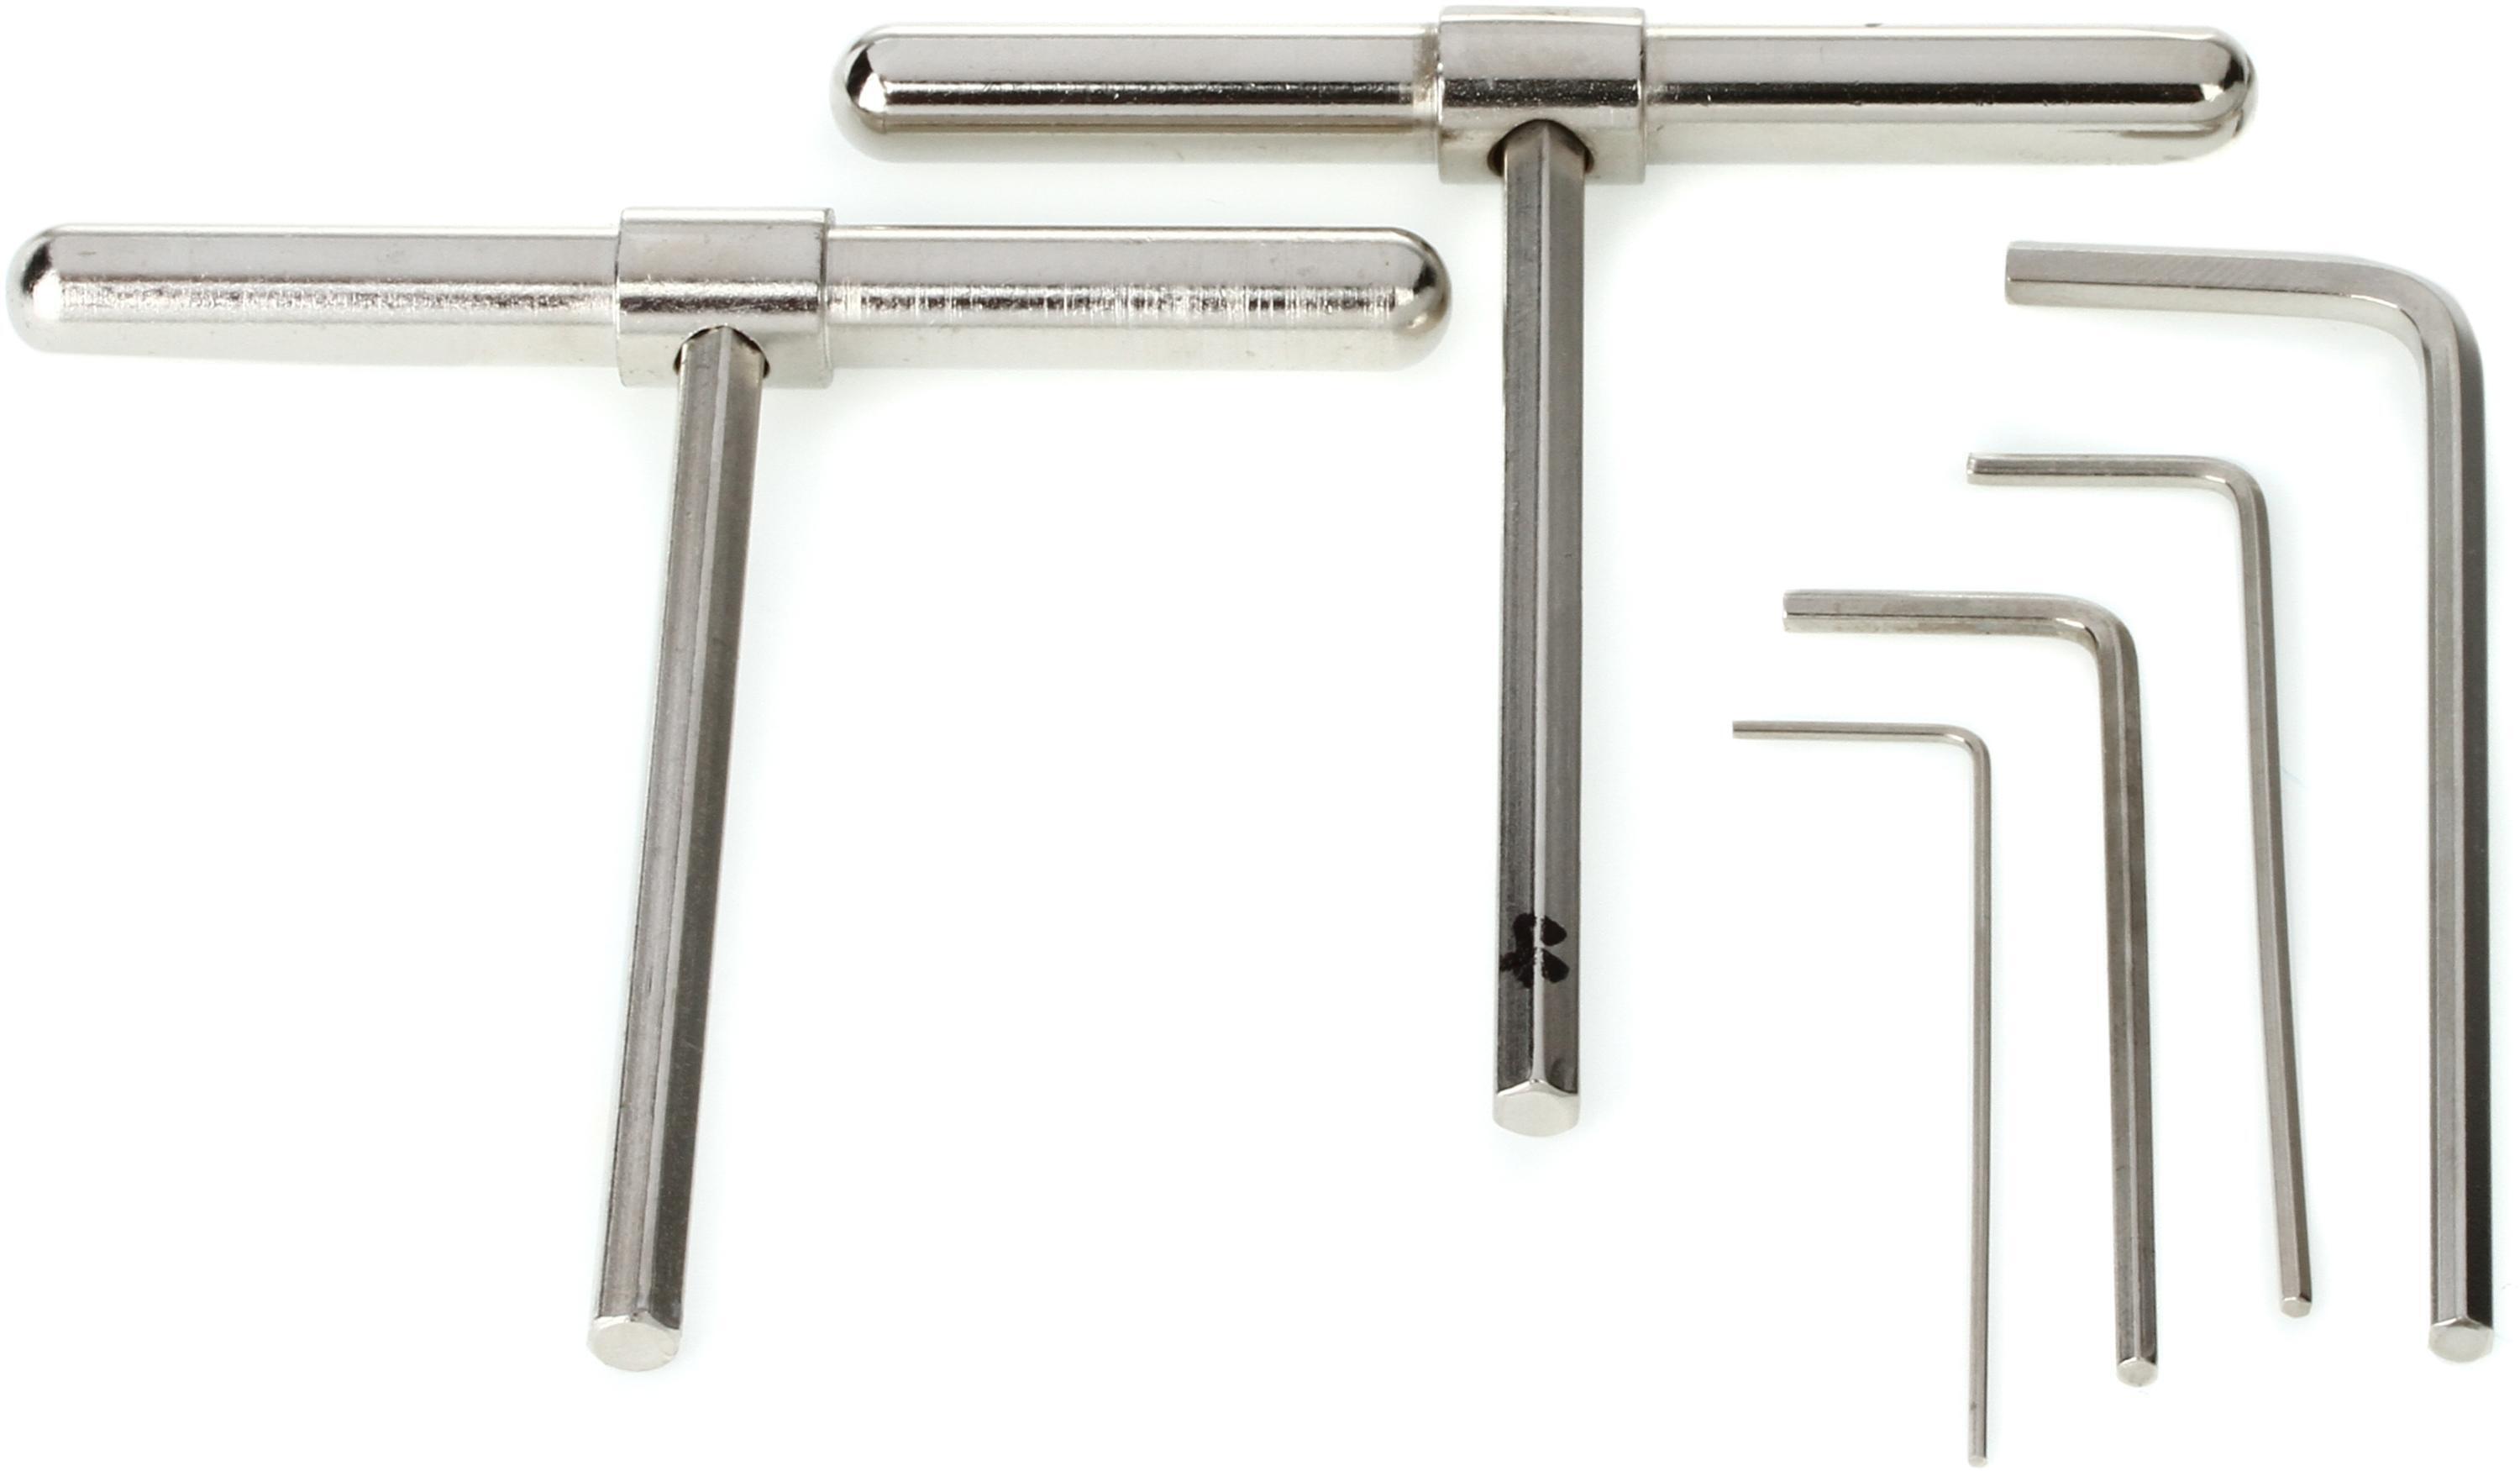 Strandberg Allen Key Kit for Bridge, Tunning, and Truss Rod